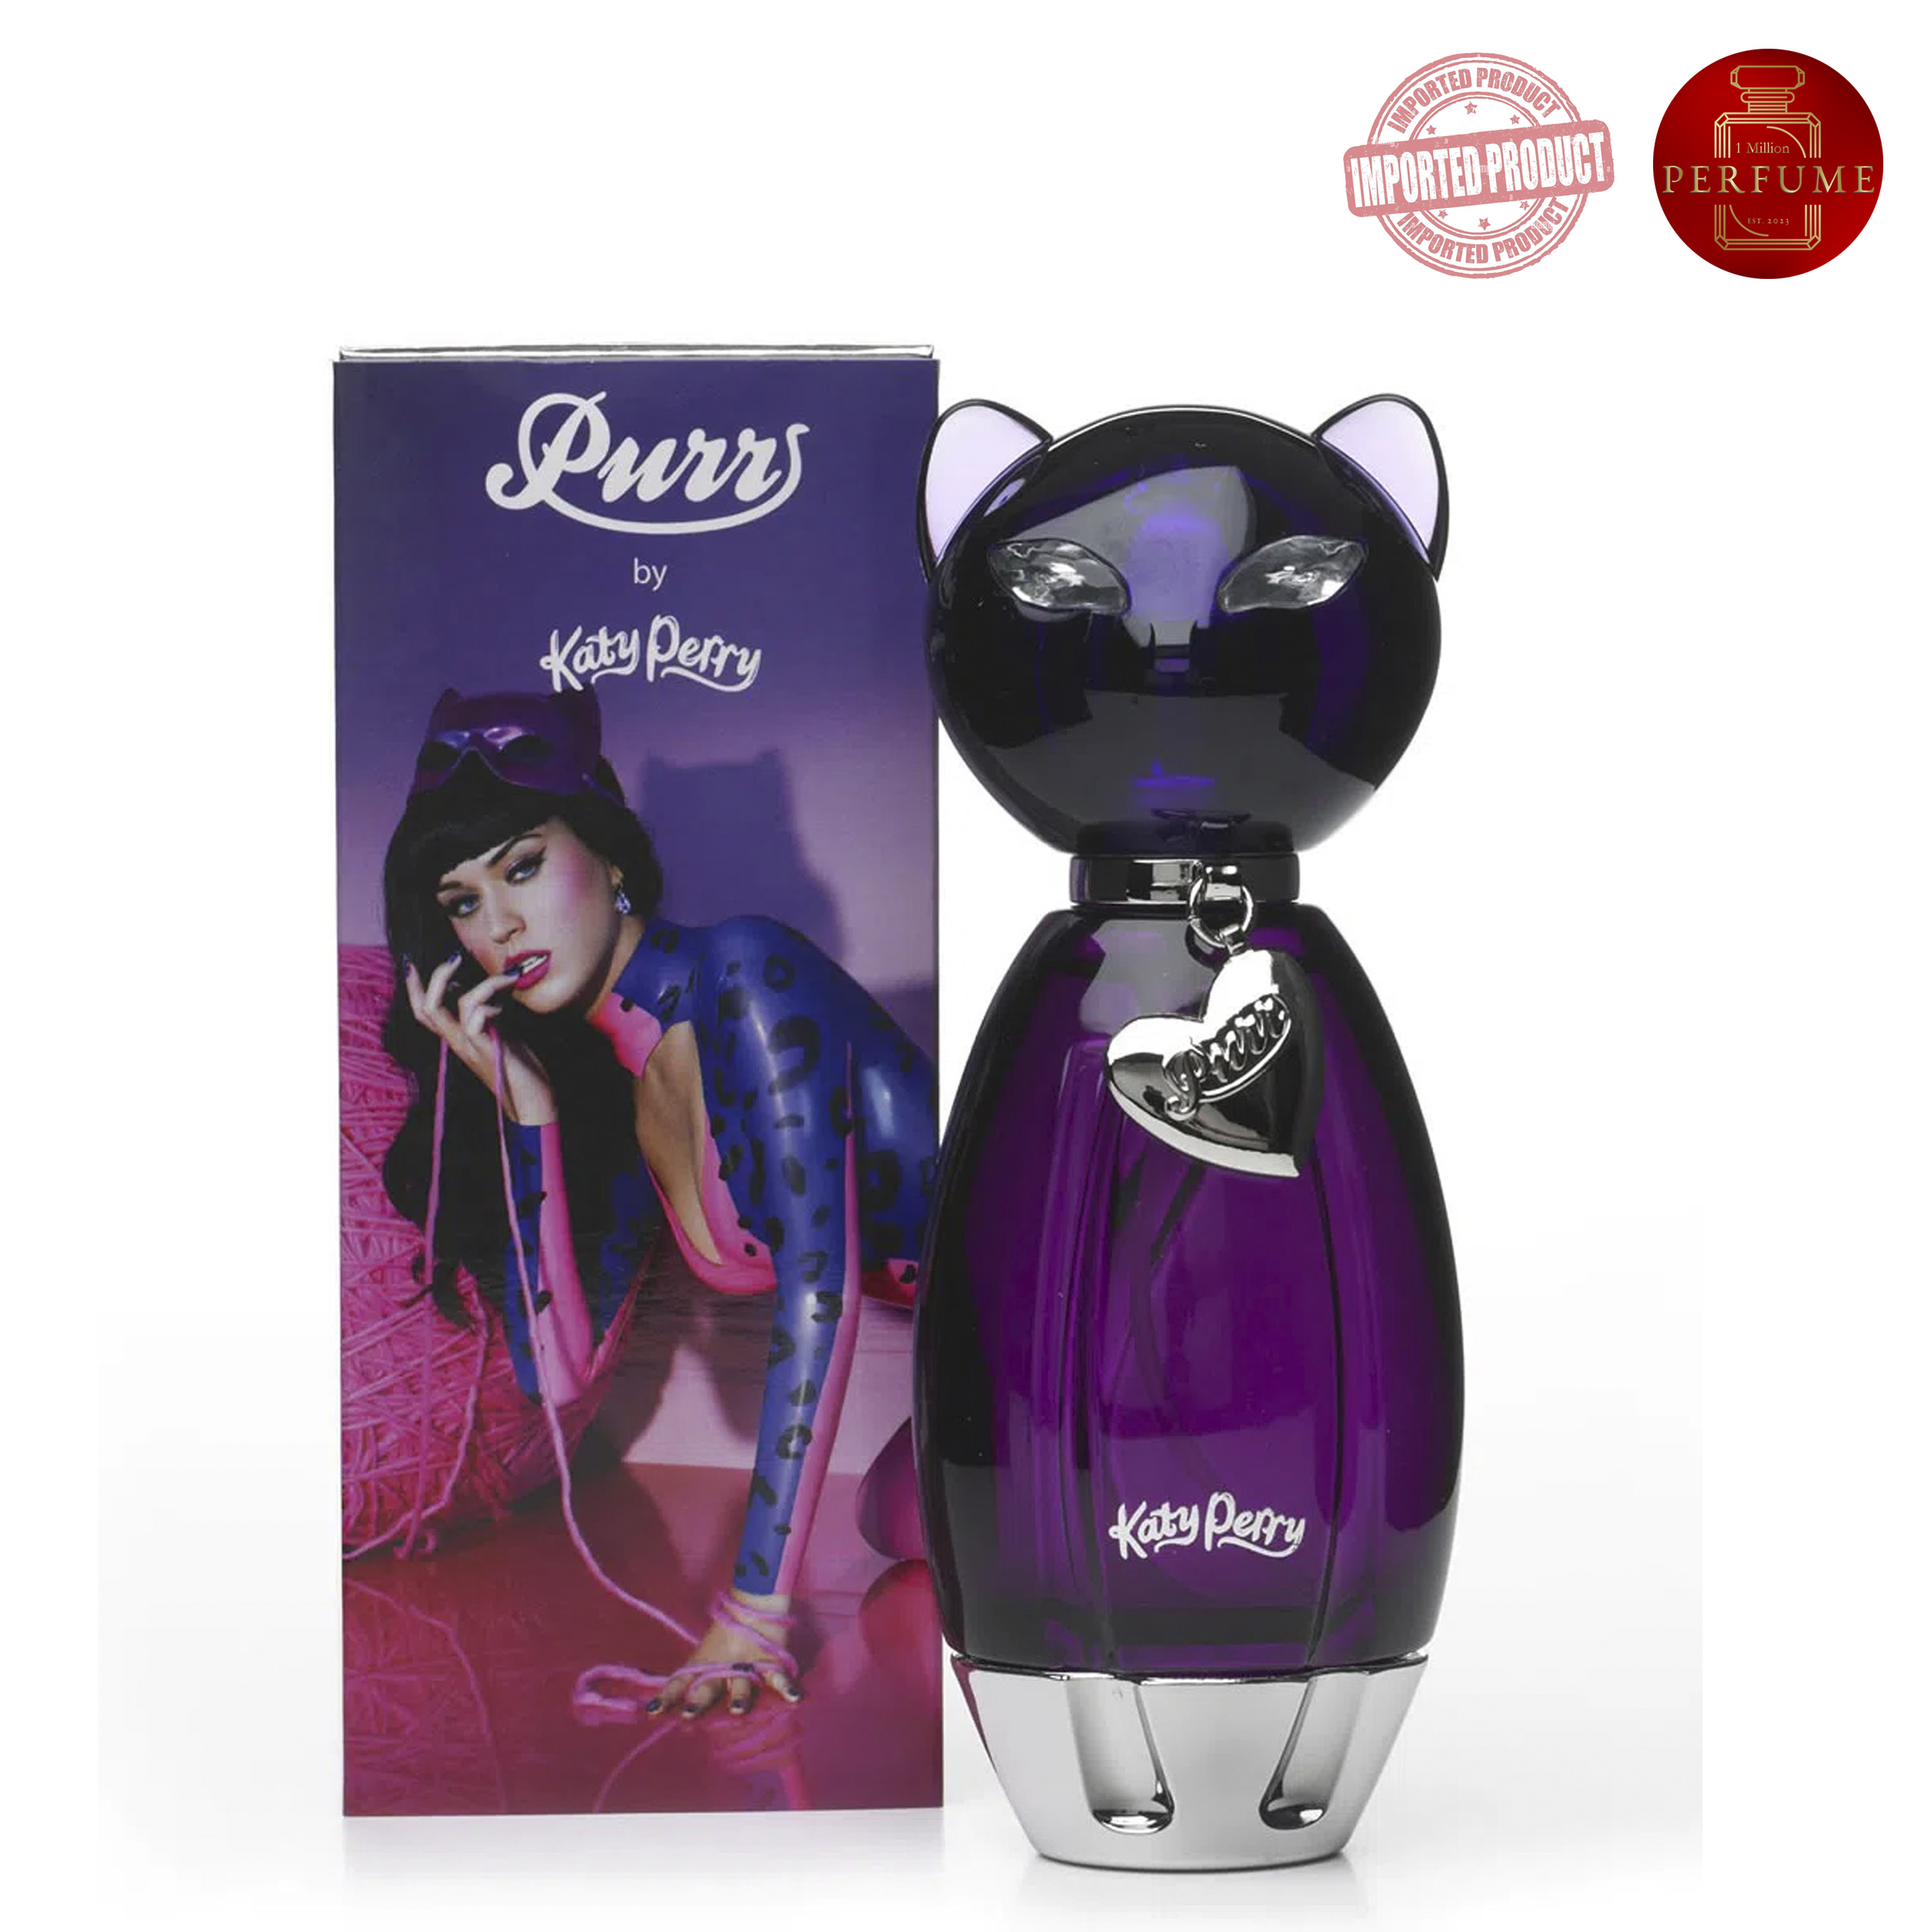 Perfume Purr Katy Perry  (Replica Con Fragancia Importada)- Mujer